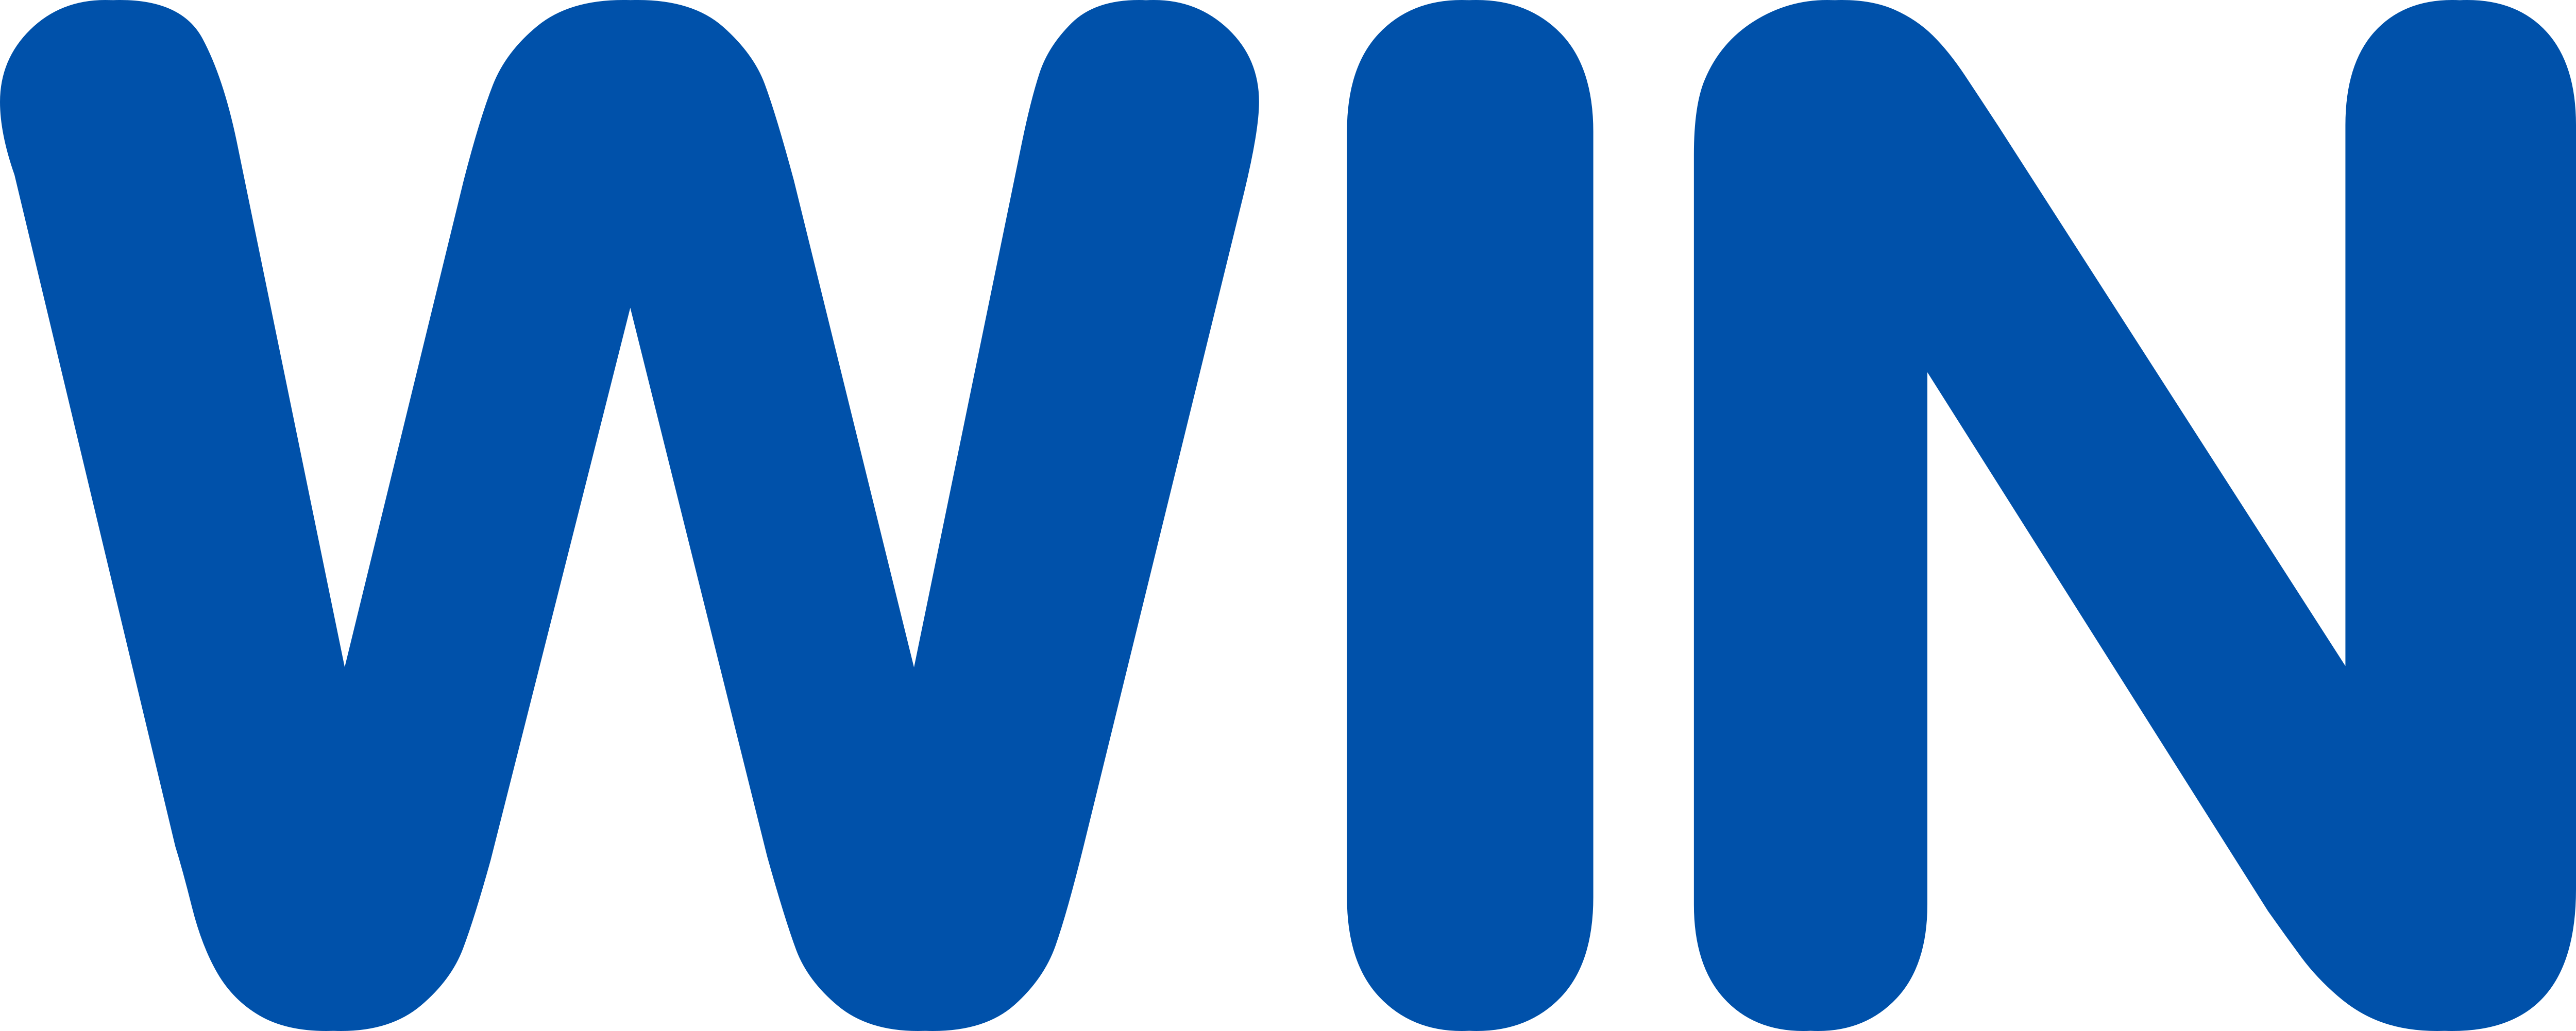 Win Television – Logos Download